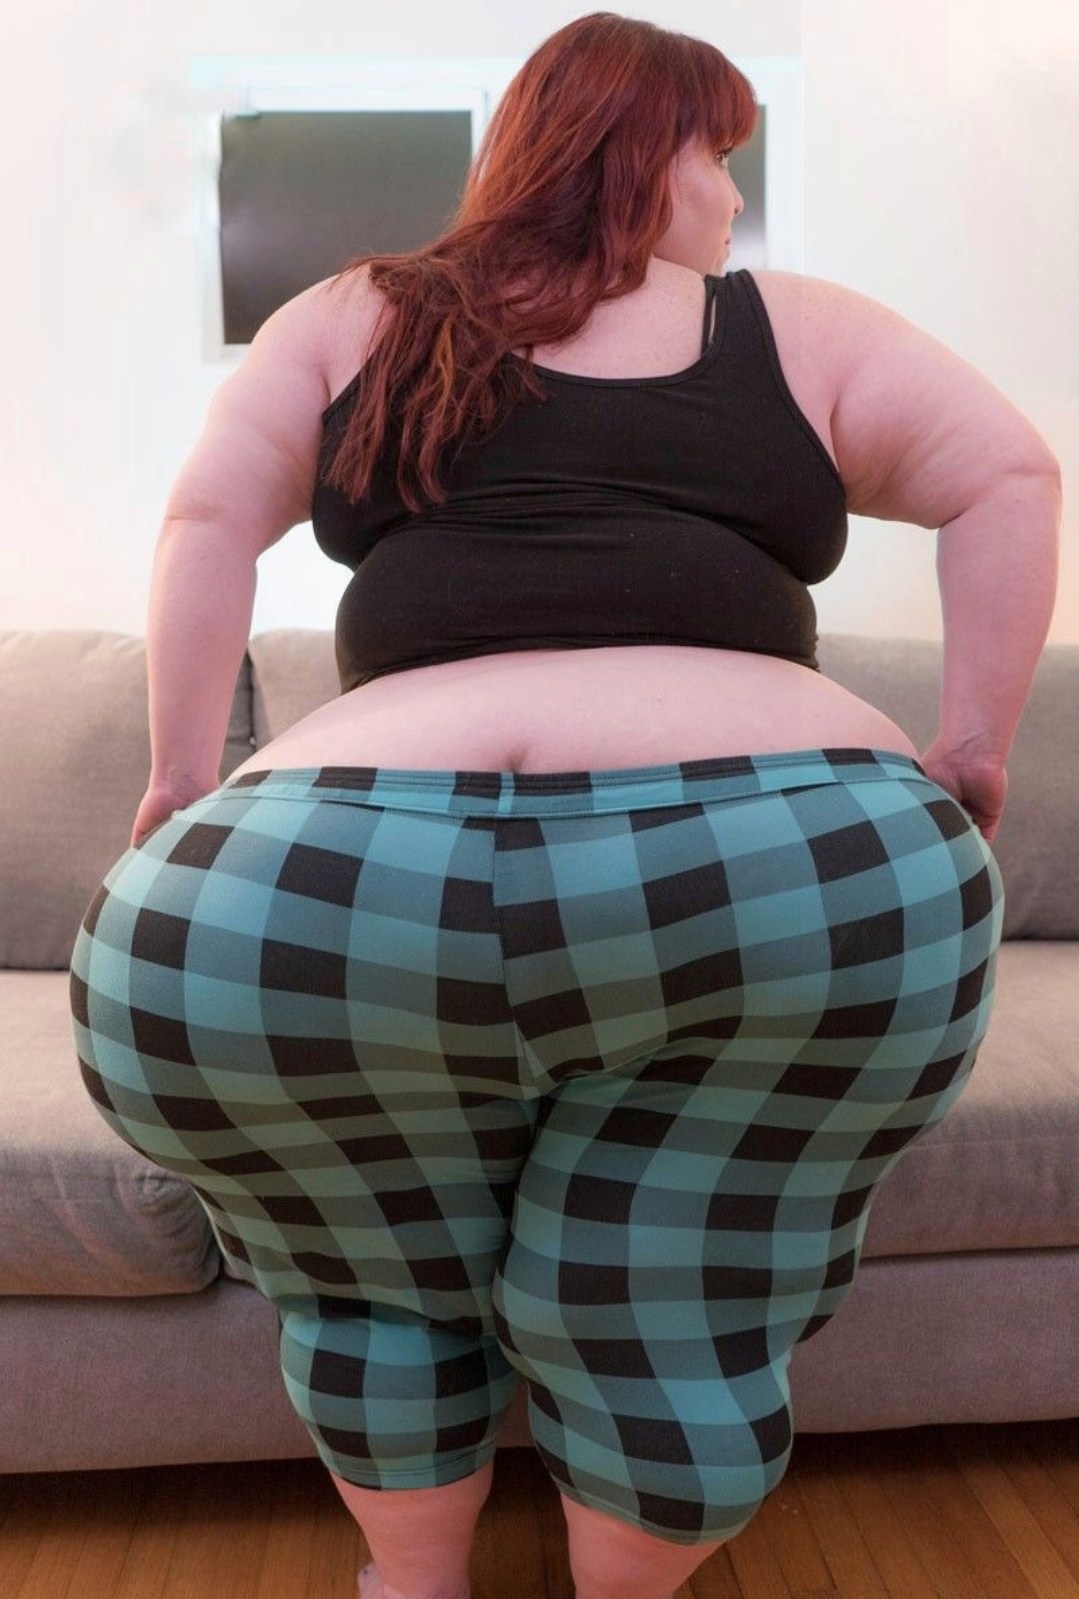 Big Fat Pussie